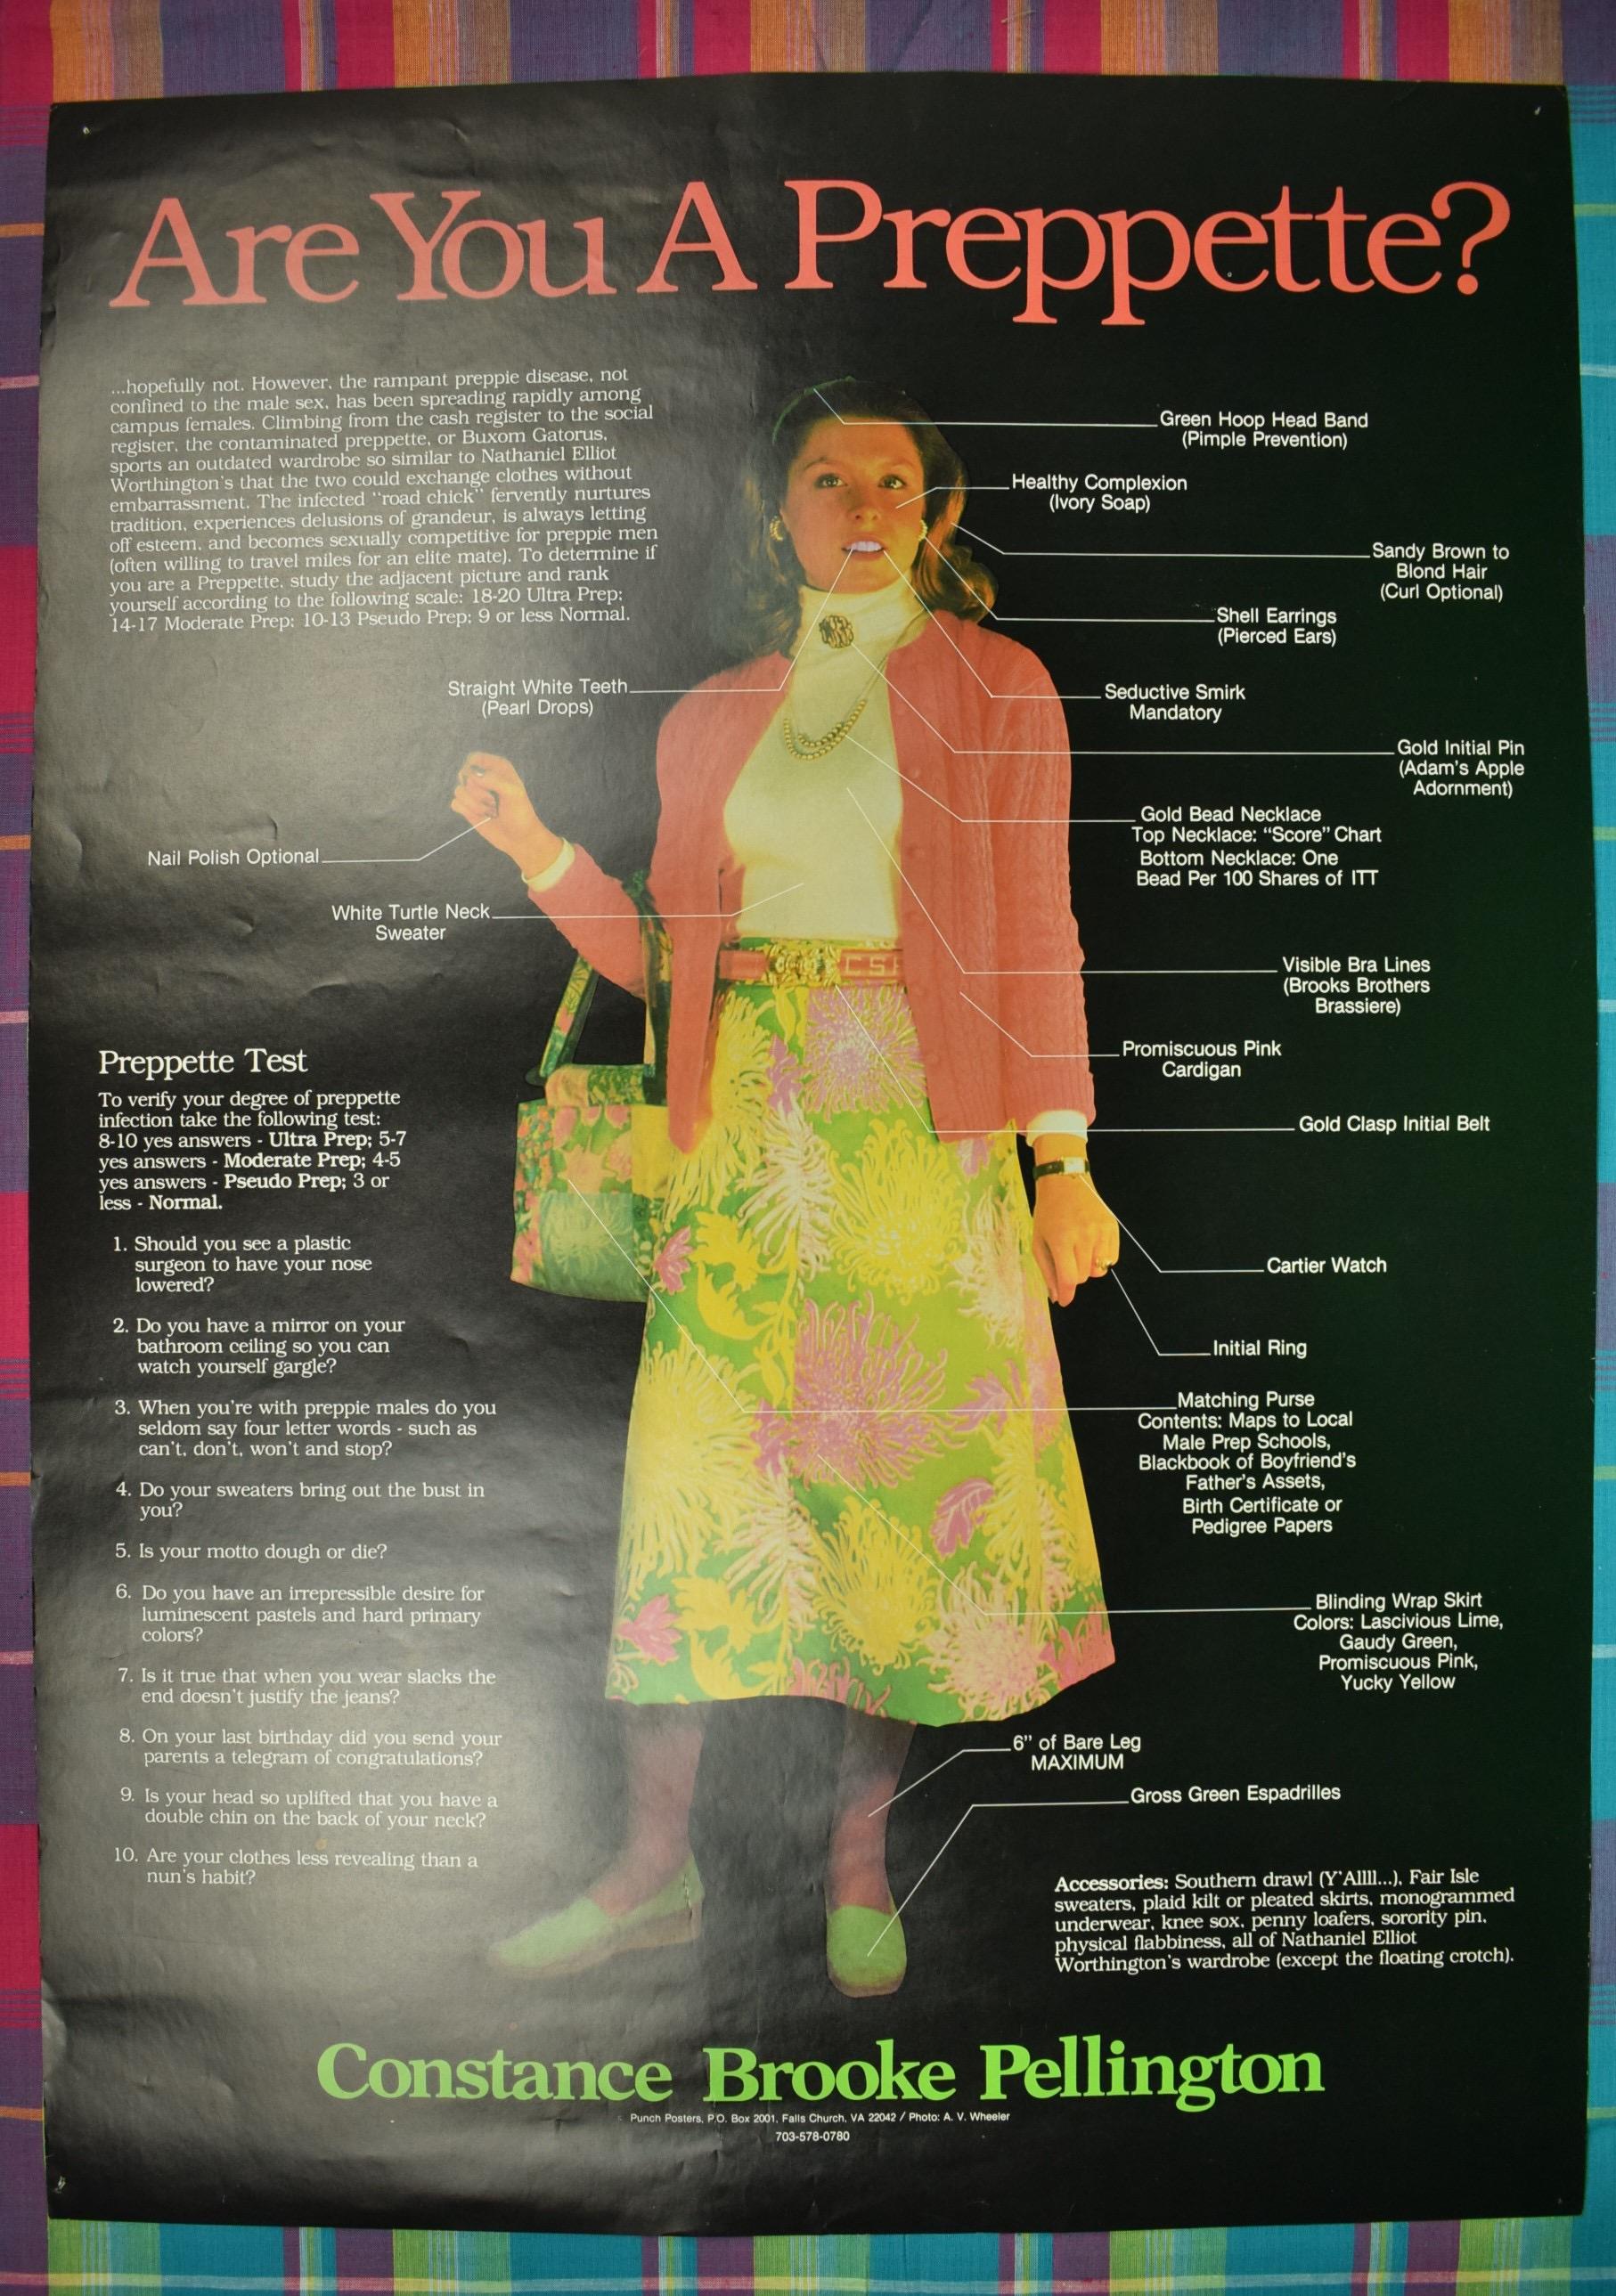 "Are You a Preppette?" Constance Brooke Pellington Color Poster (NOS) - Print by Unknown